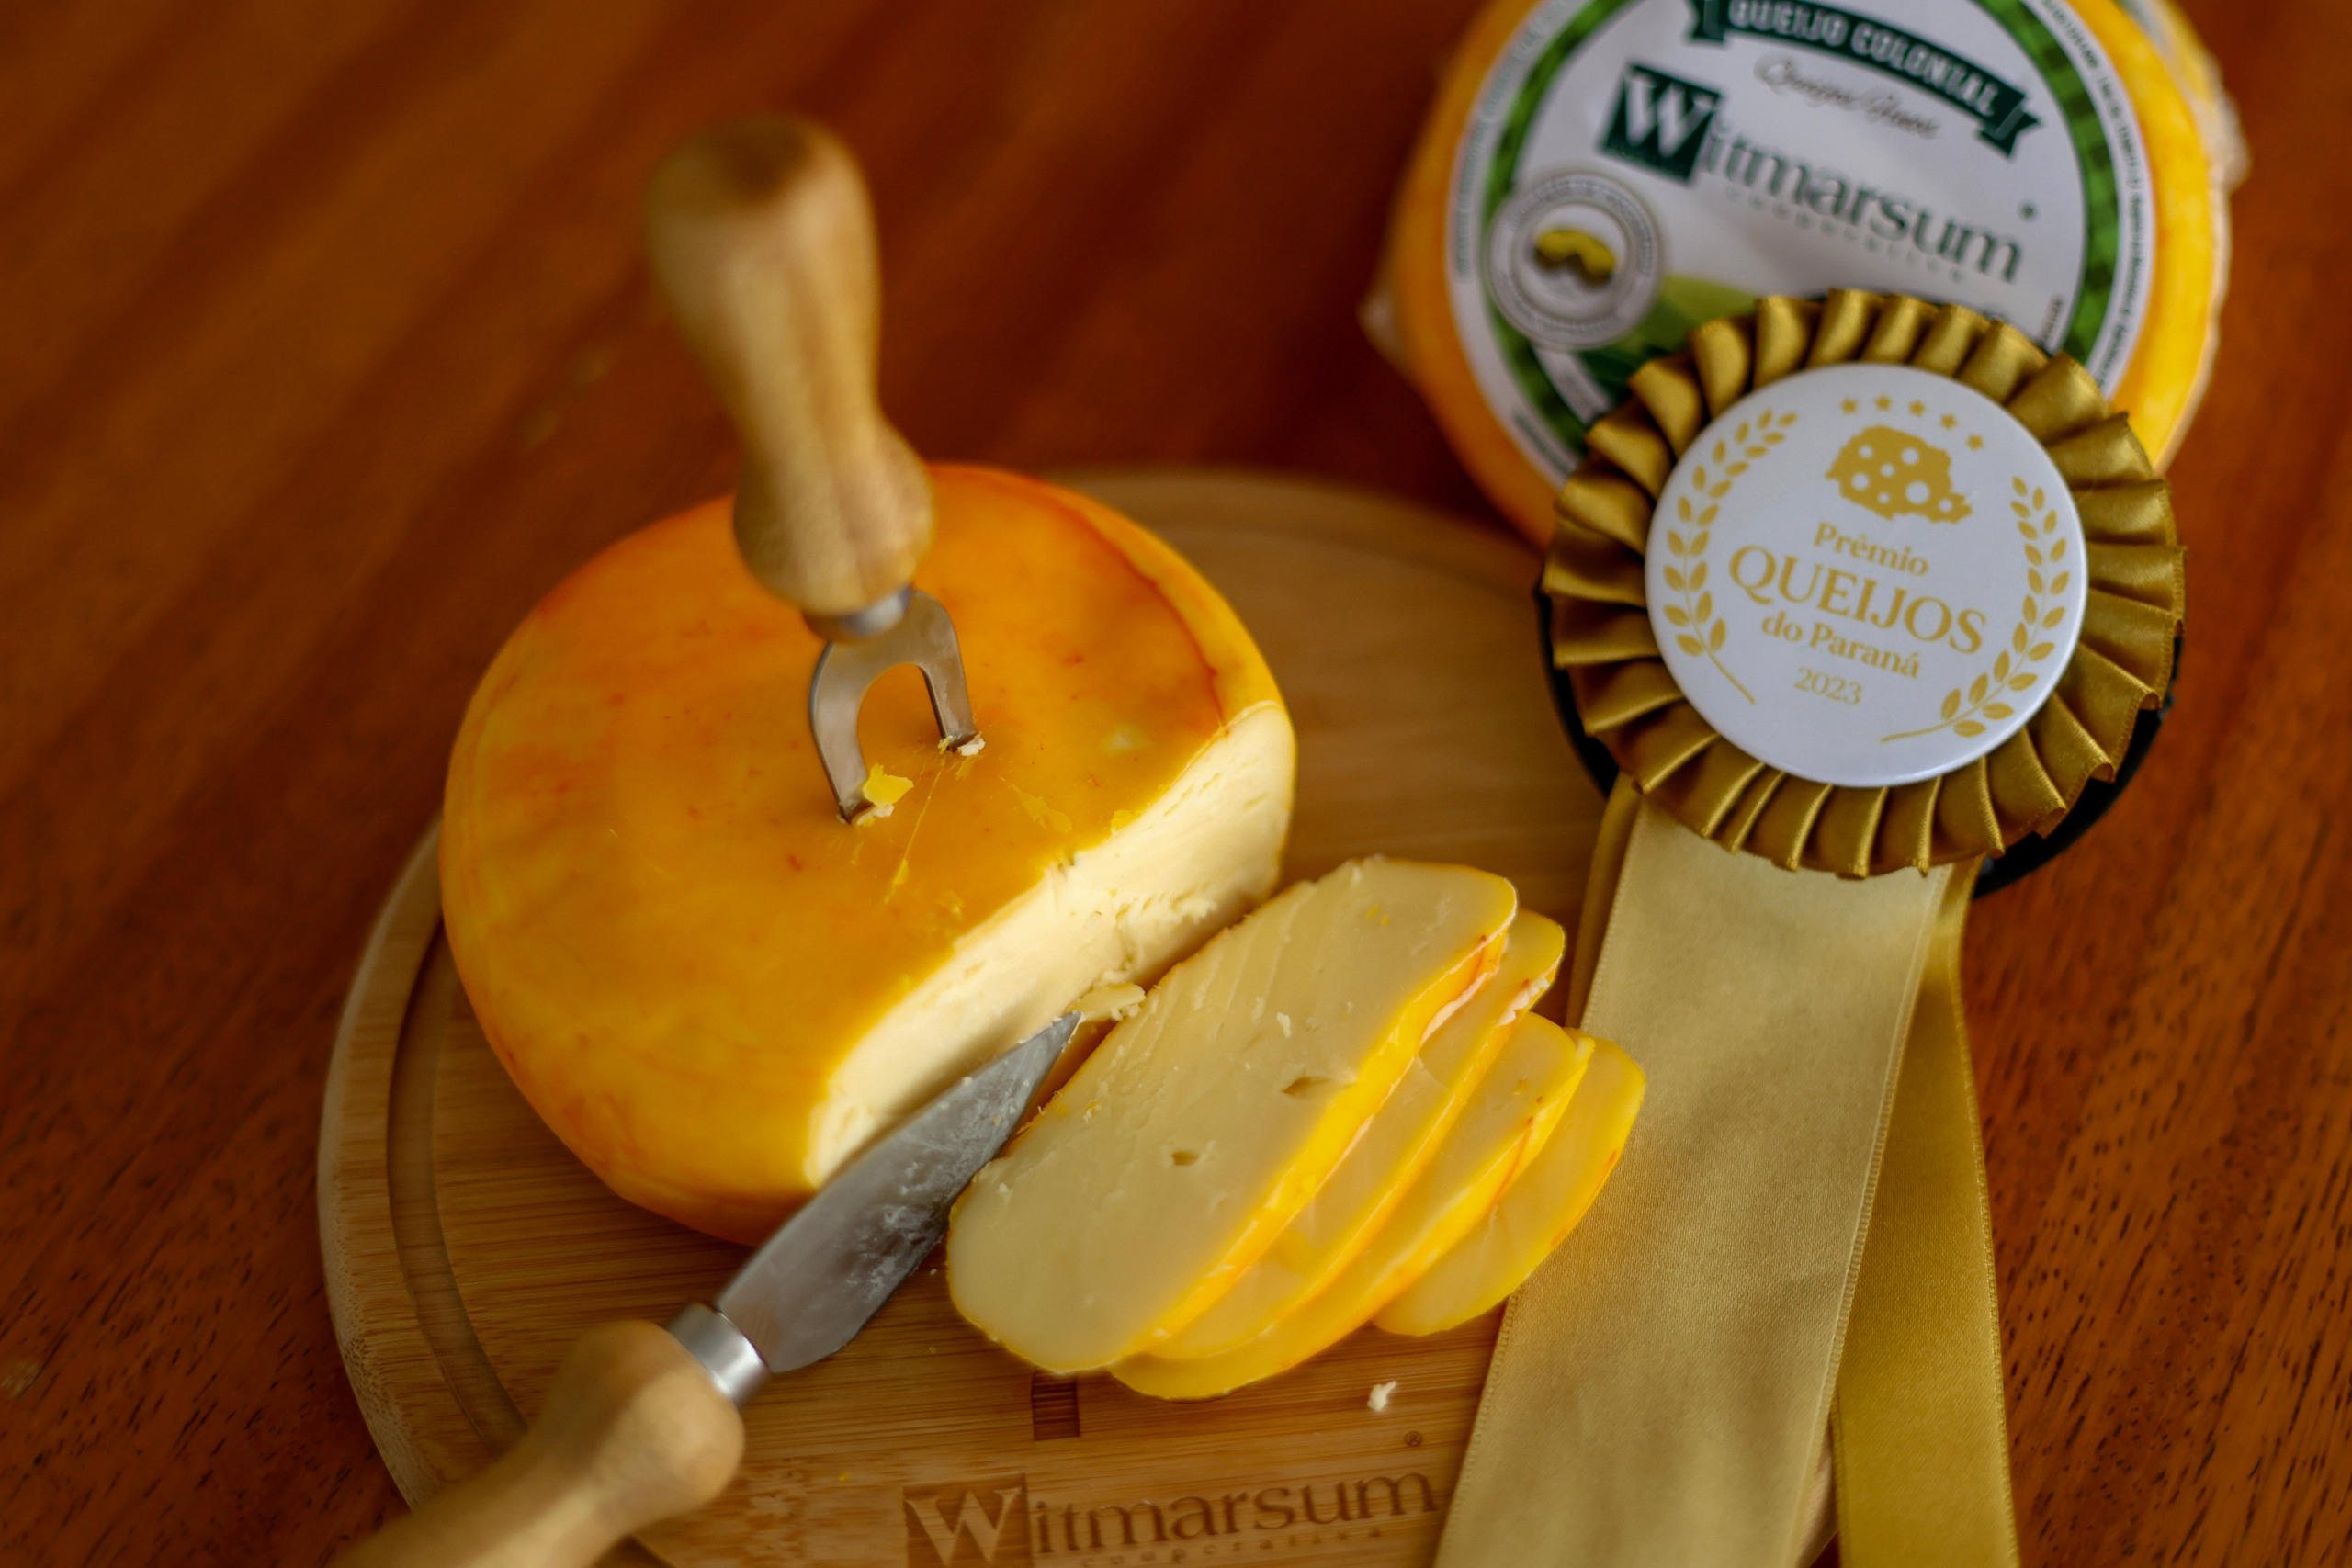 queijo witmarsum020 scaled